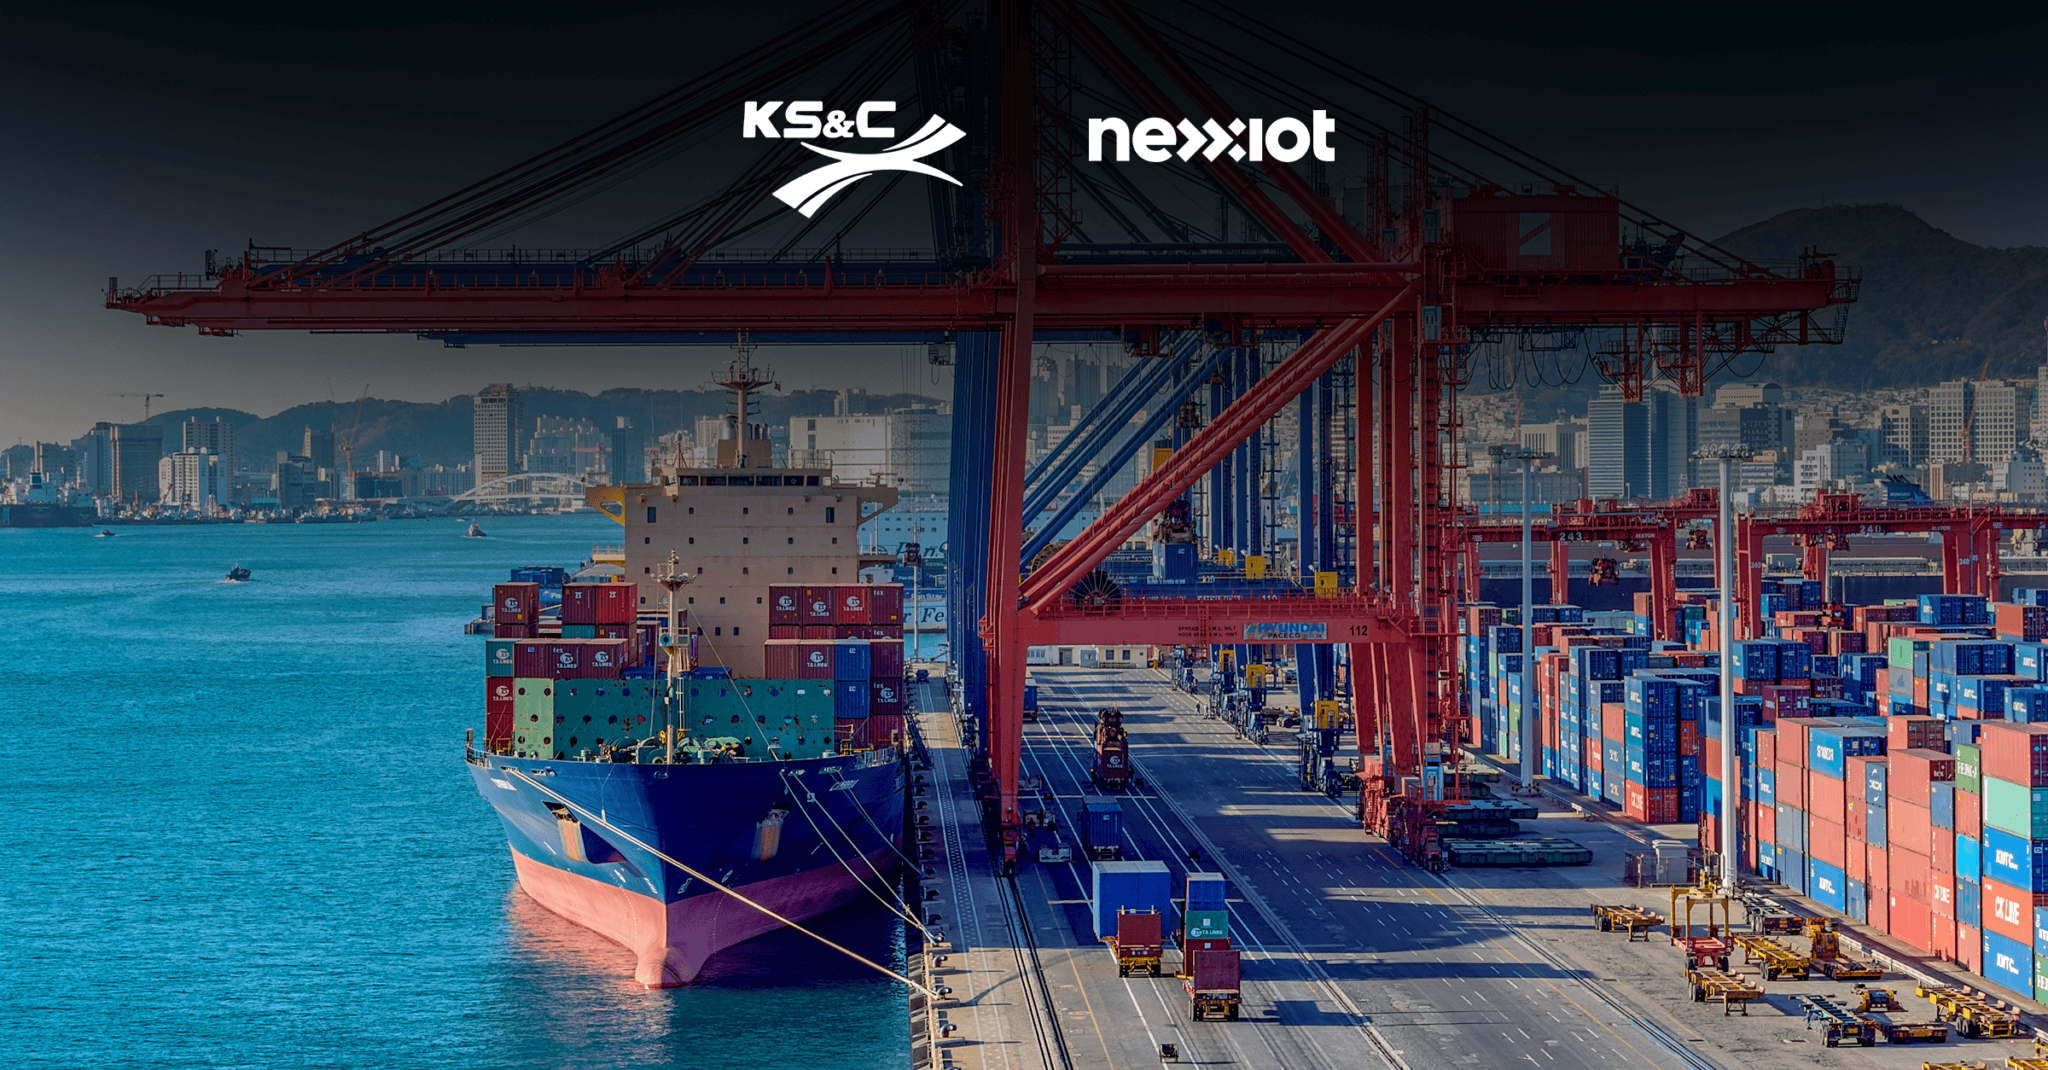 Nexxiot enters into partnership with KS&C